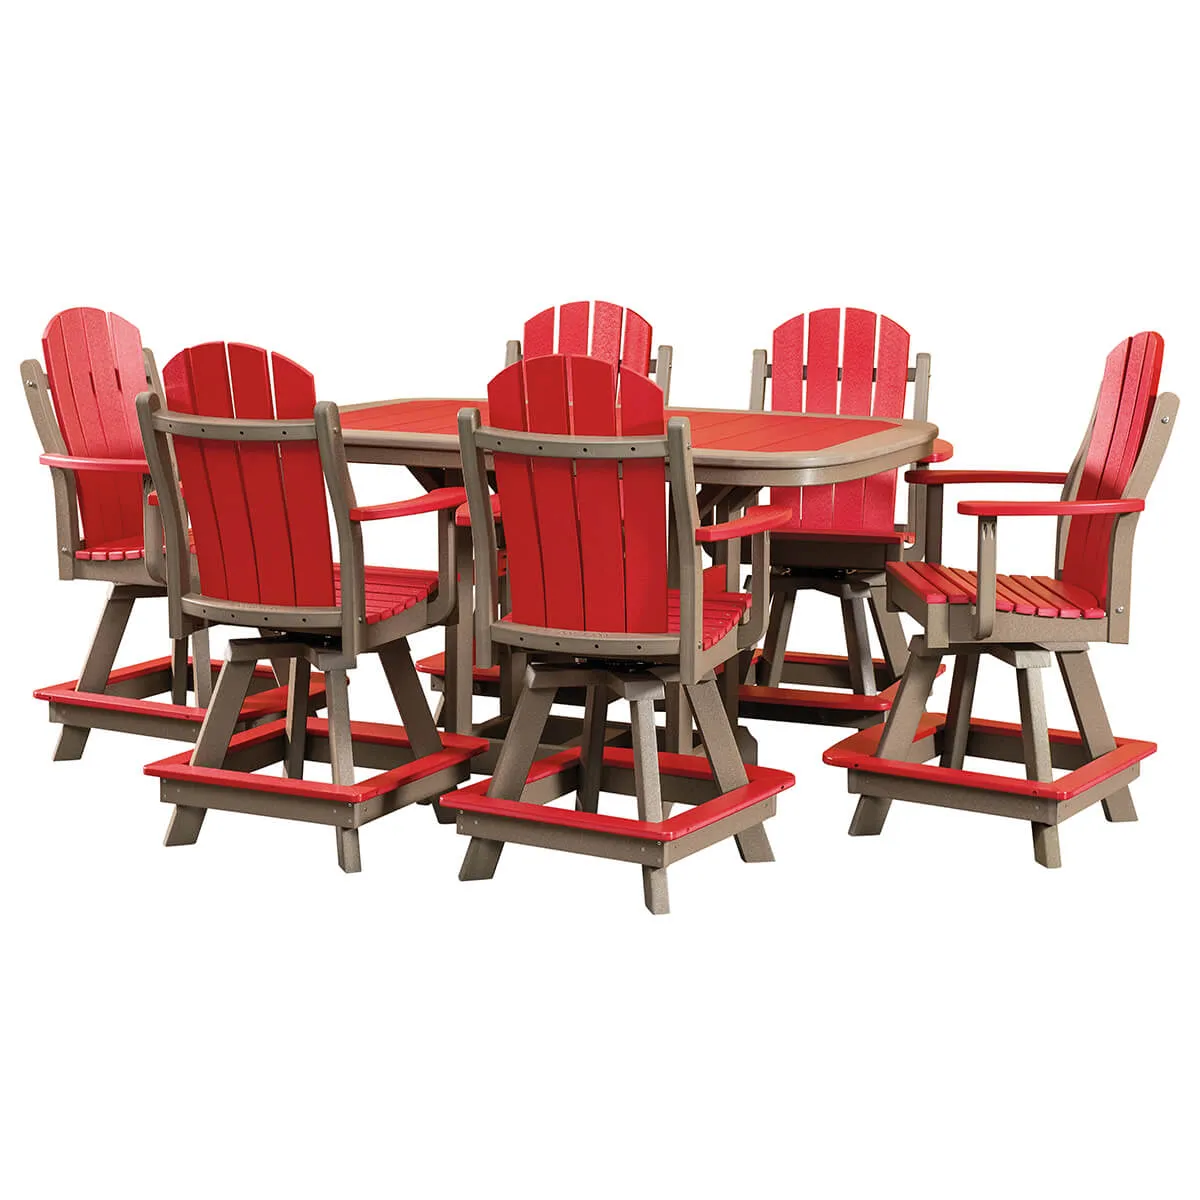 42 Inch x 64 Inch Oval Table with Malibu Swivel Bar Chairs